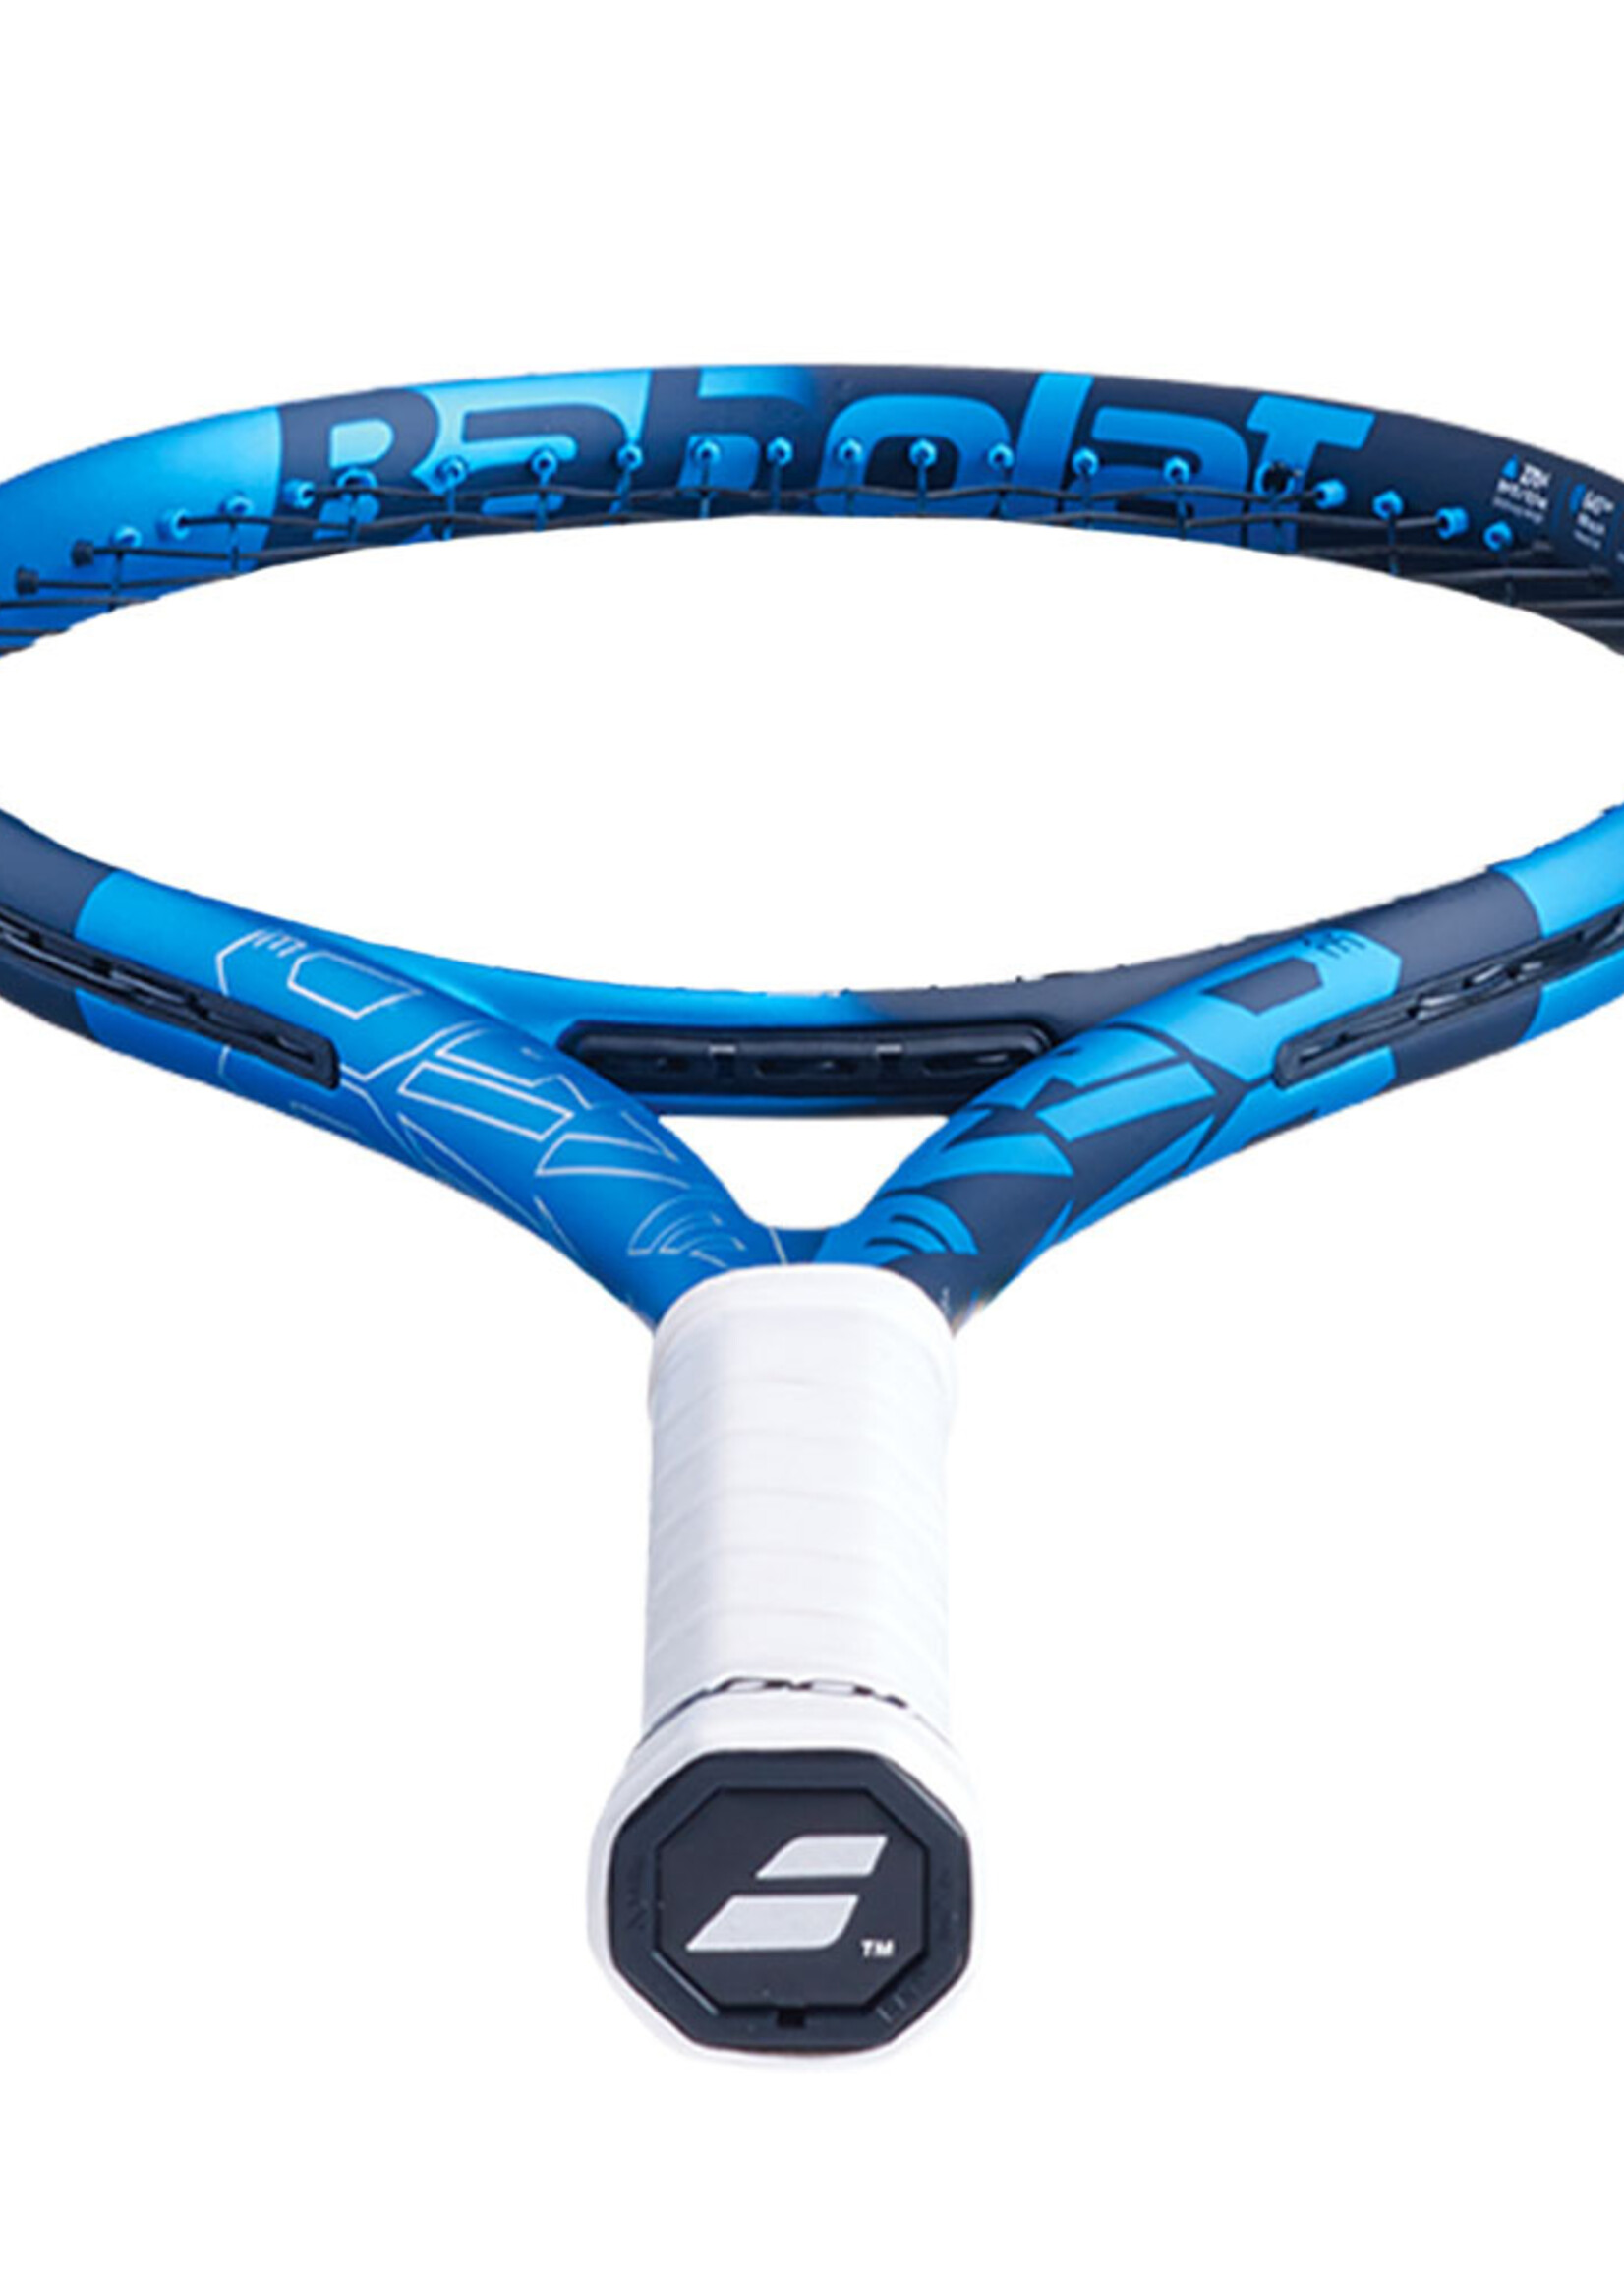 Babolat Babolat Pure Drive Lite (270g) Tennis Racquet